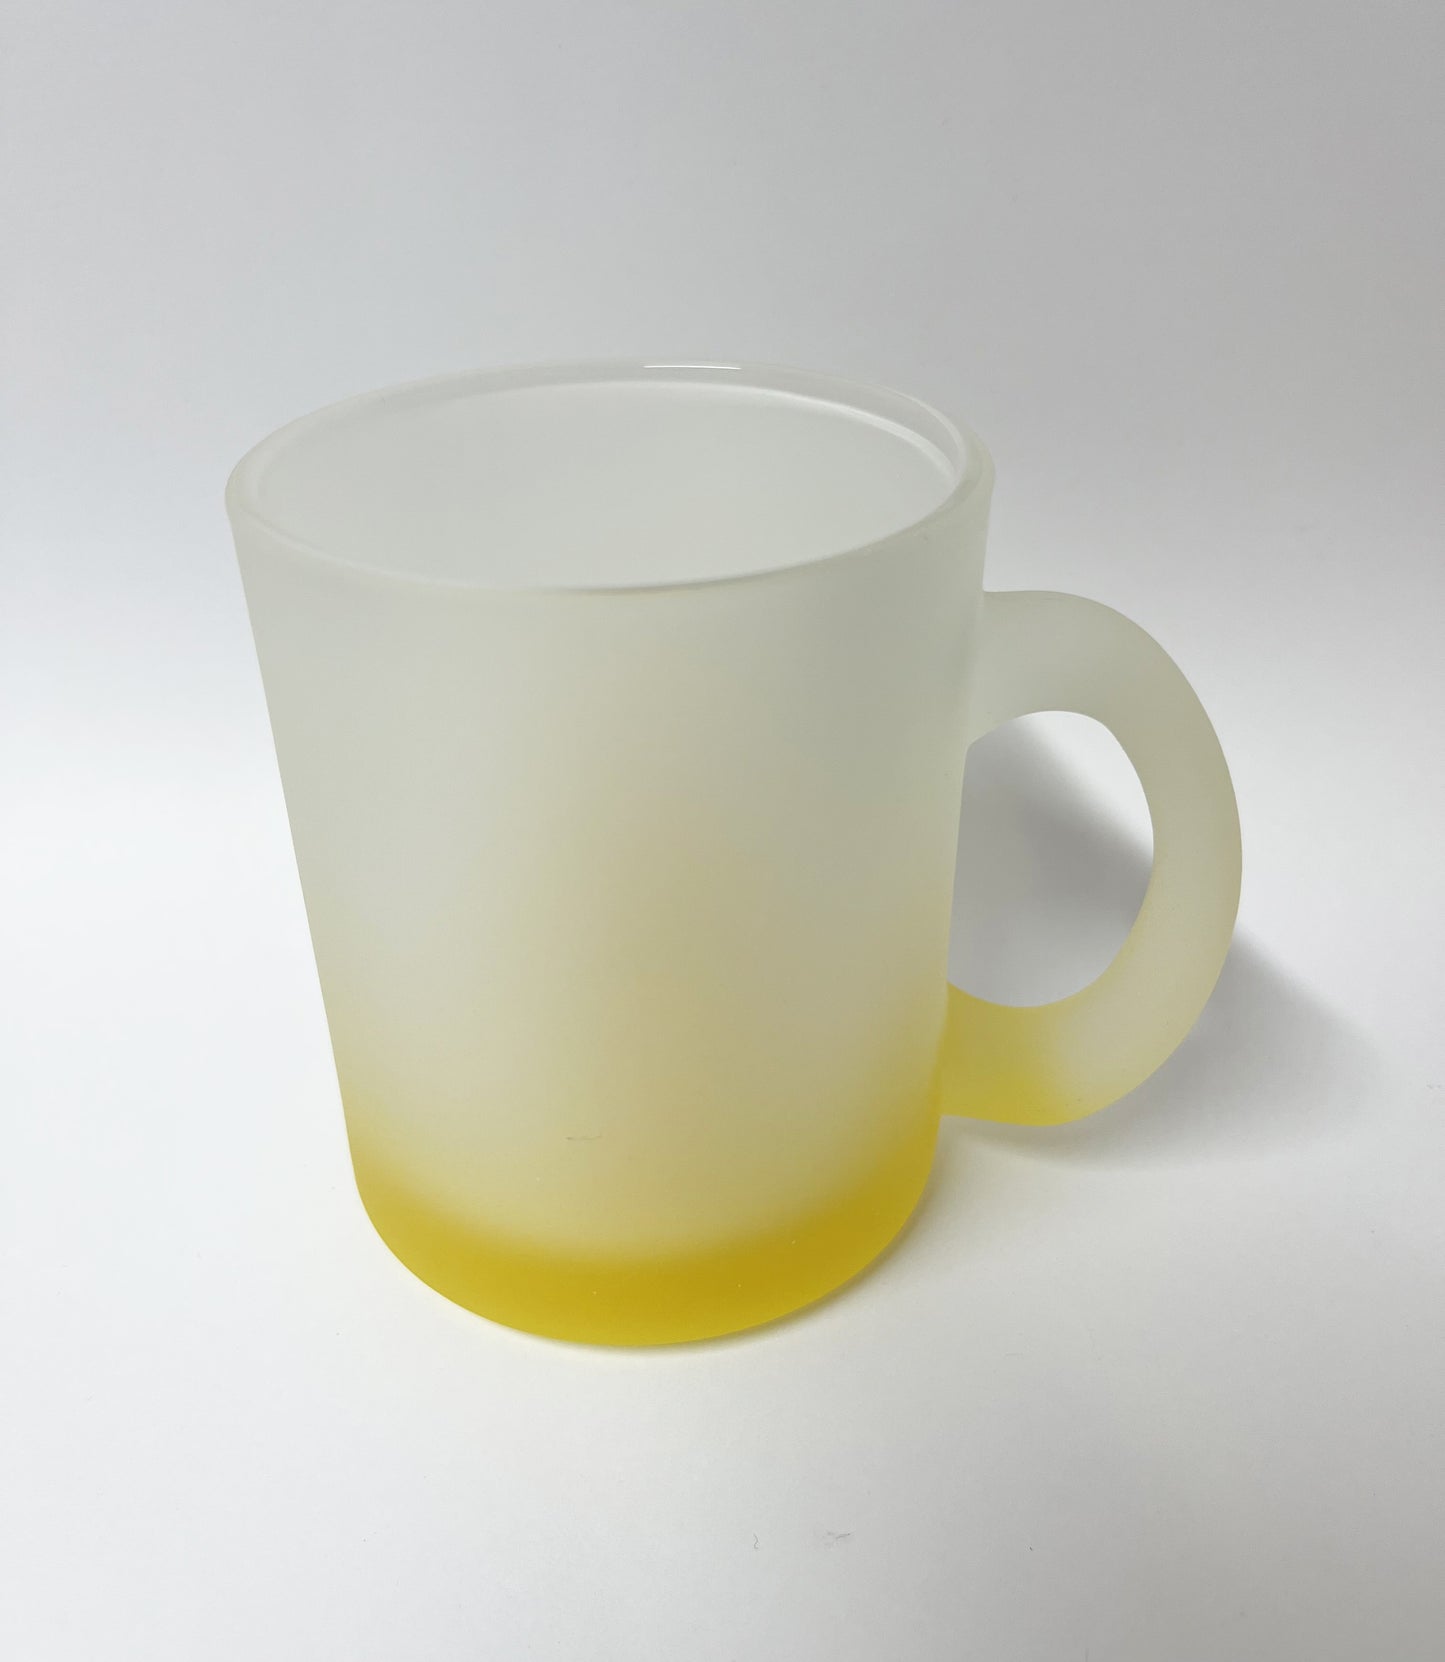 Teeglas mit Farbverlauf - Sublishop.net GmbH